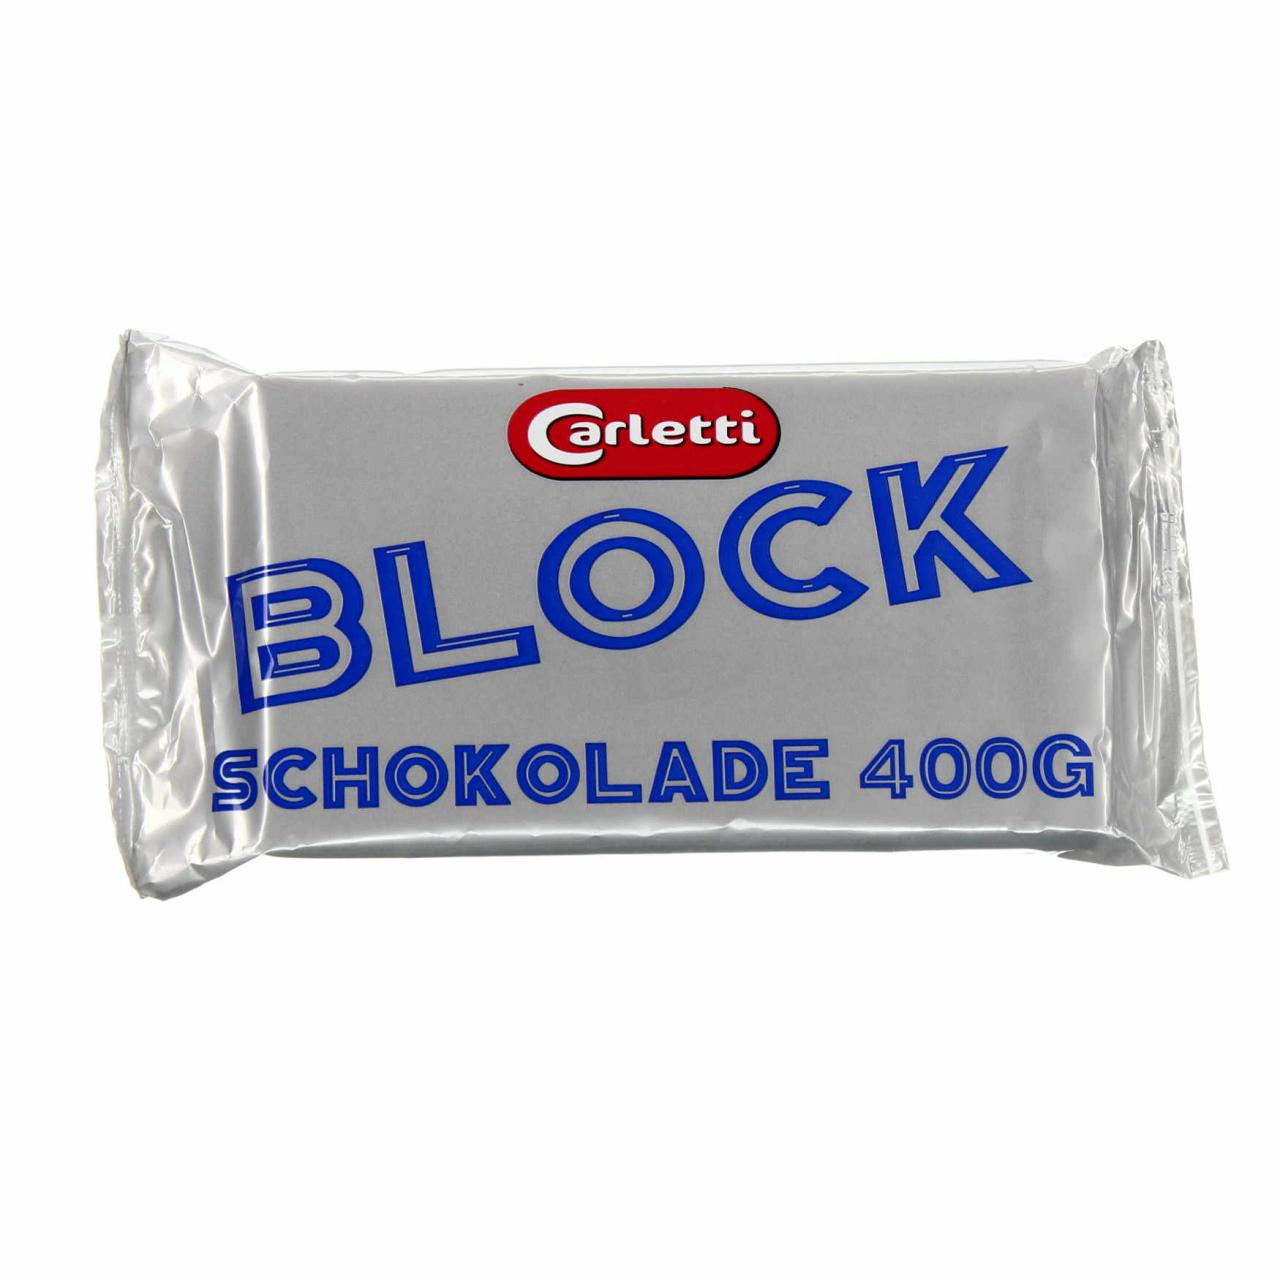 Carletti Block chokolade mørk 400g